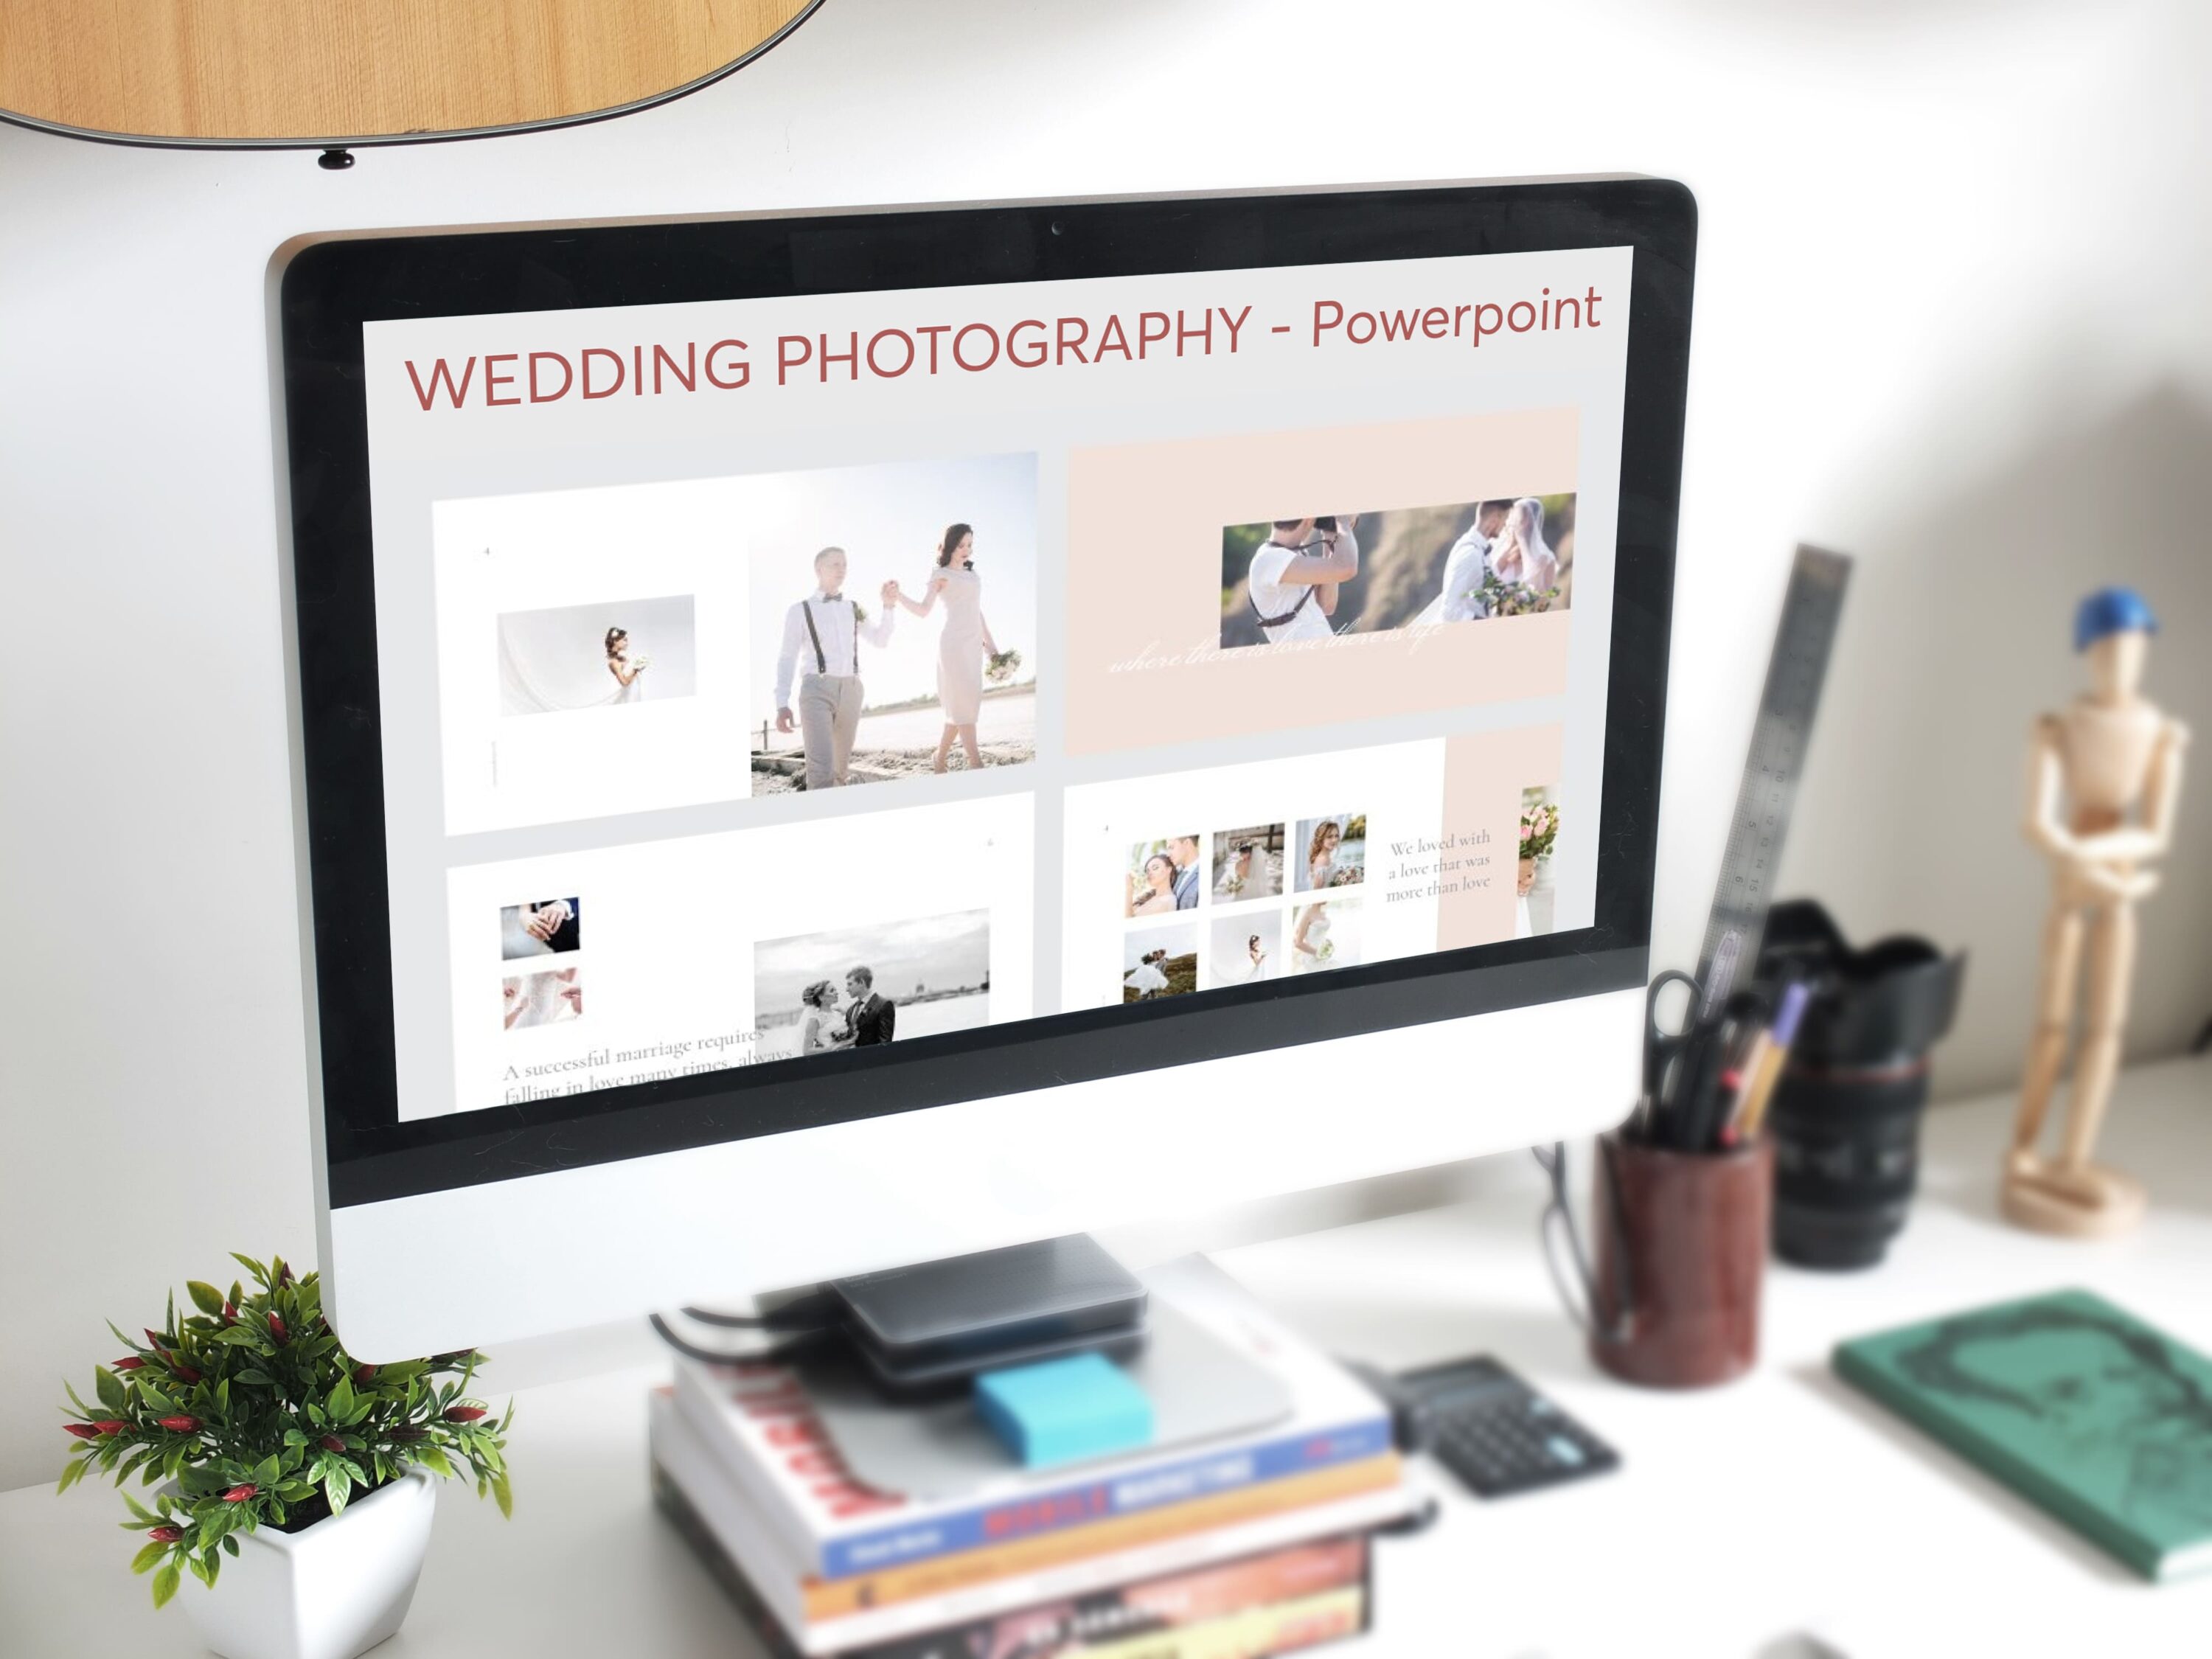 WEDDING PHOTOGRAPHY - Powerpoint - desktop.